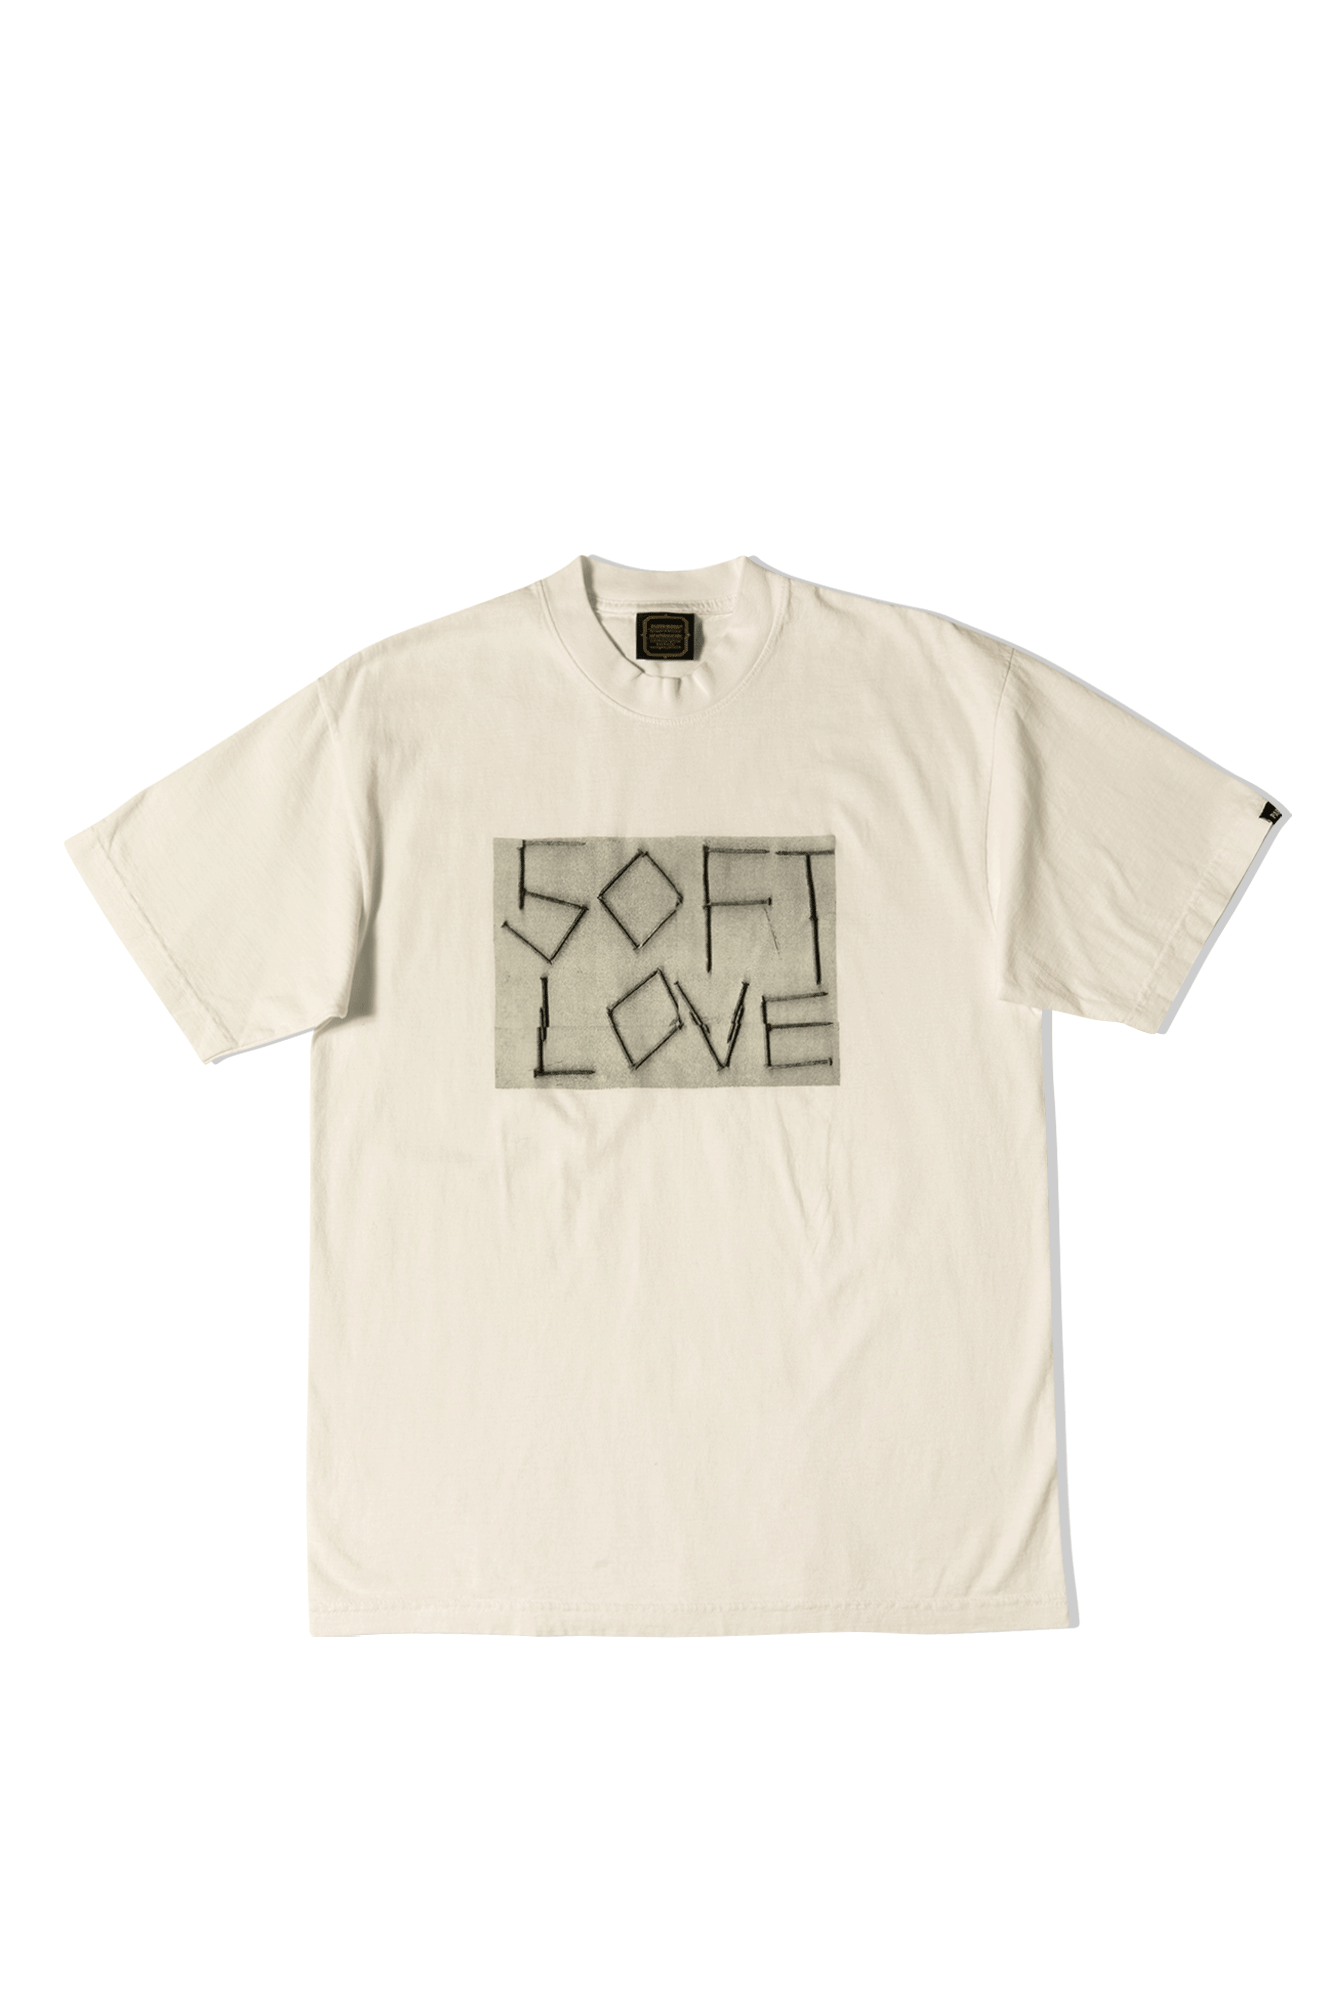 Soft Love T-Shirt